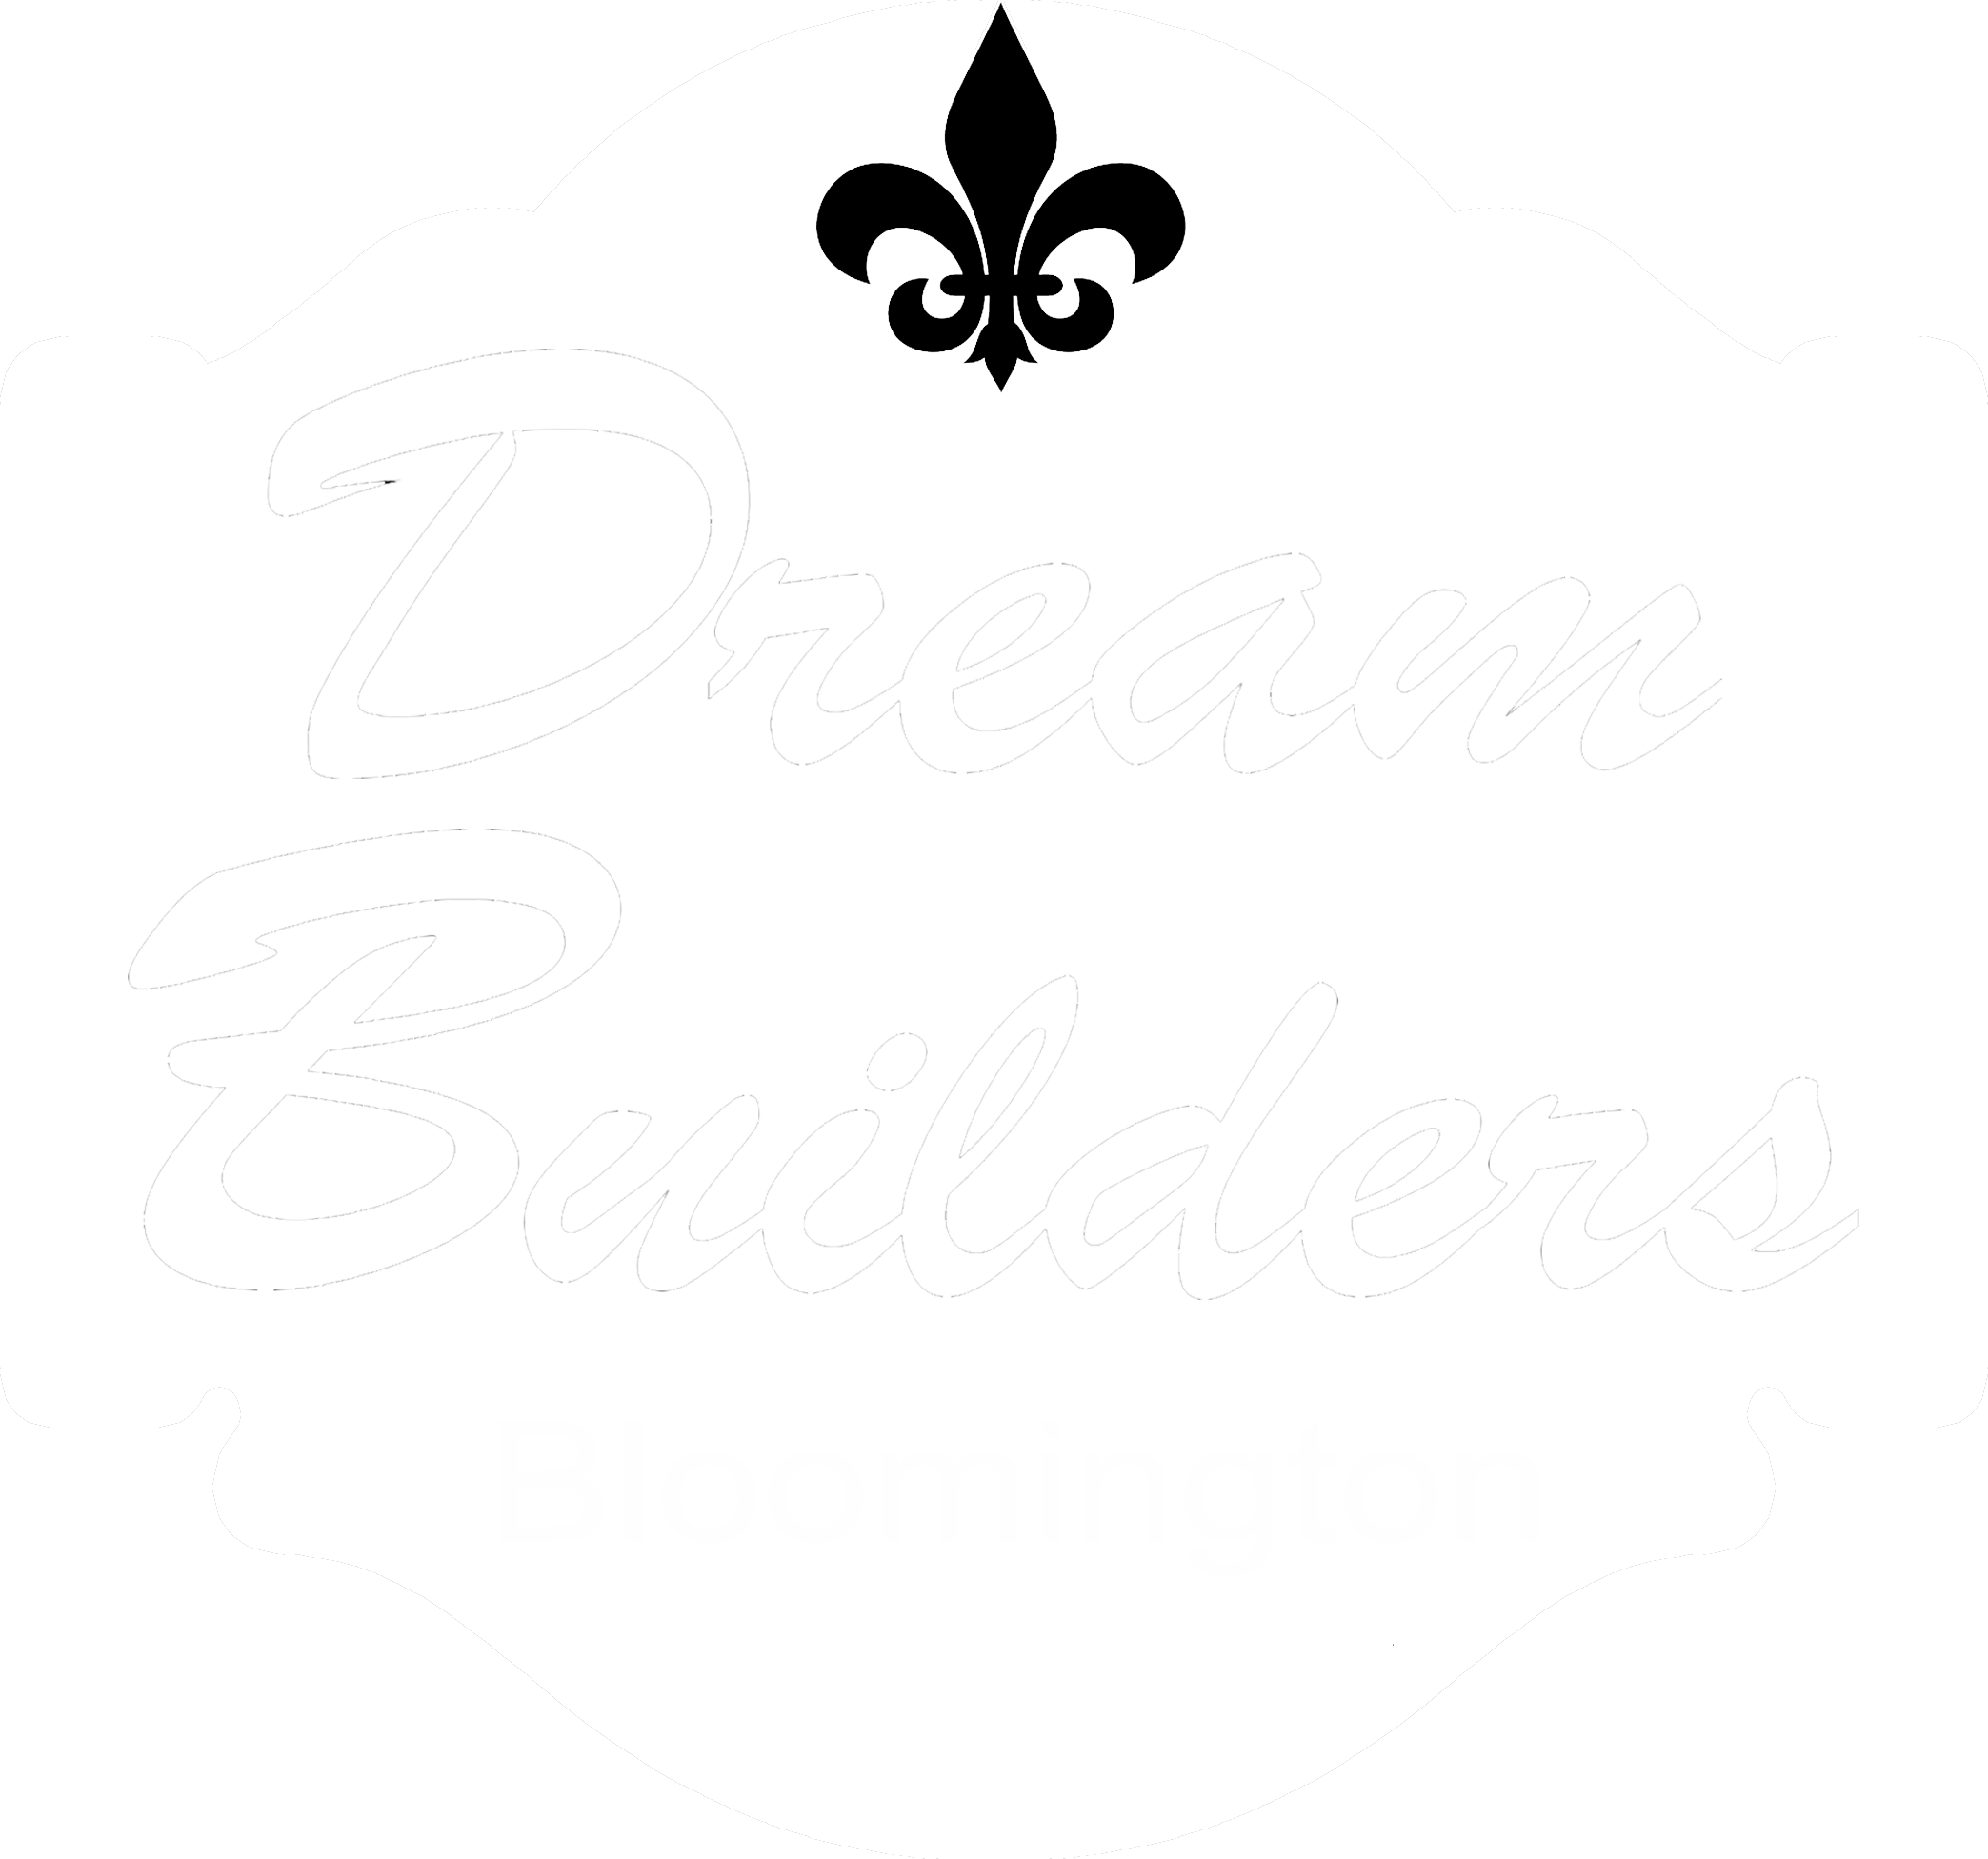 Dream Builders Logo